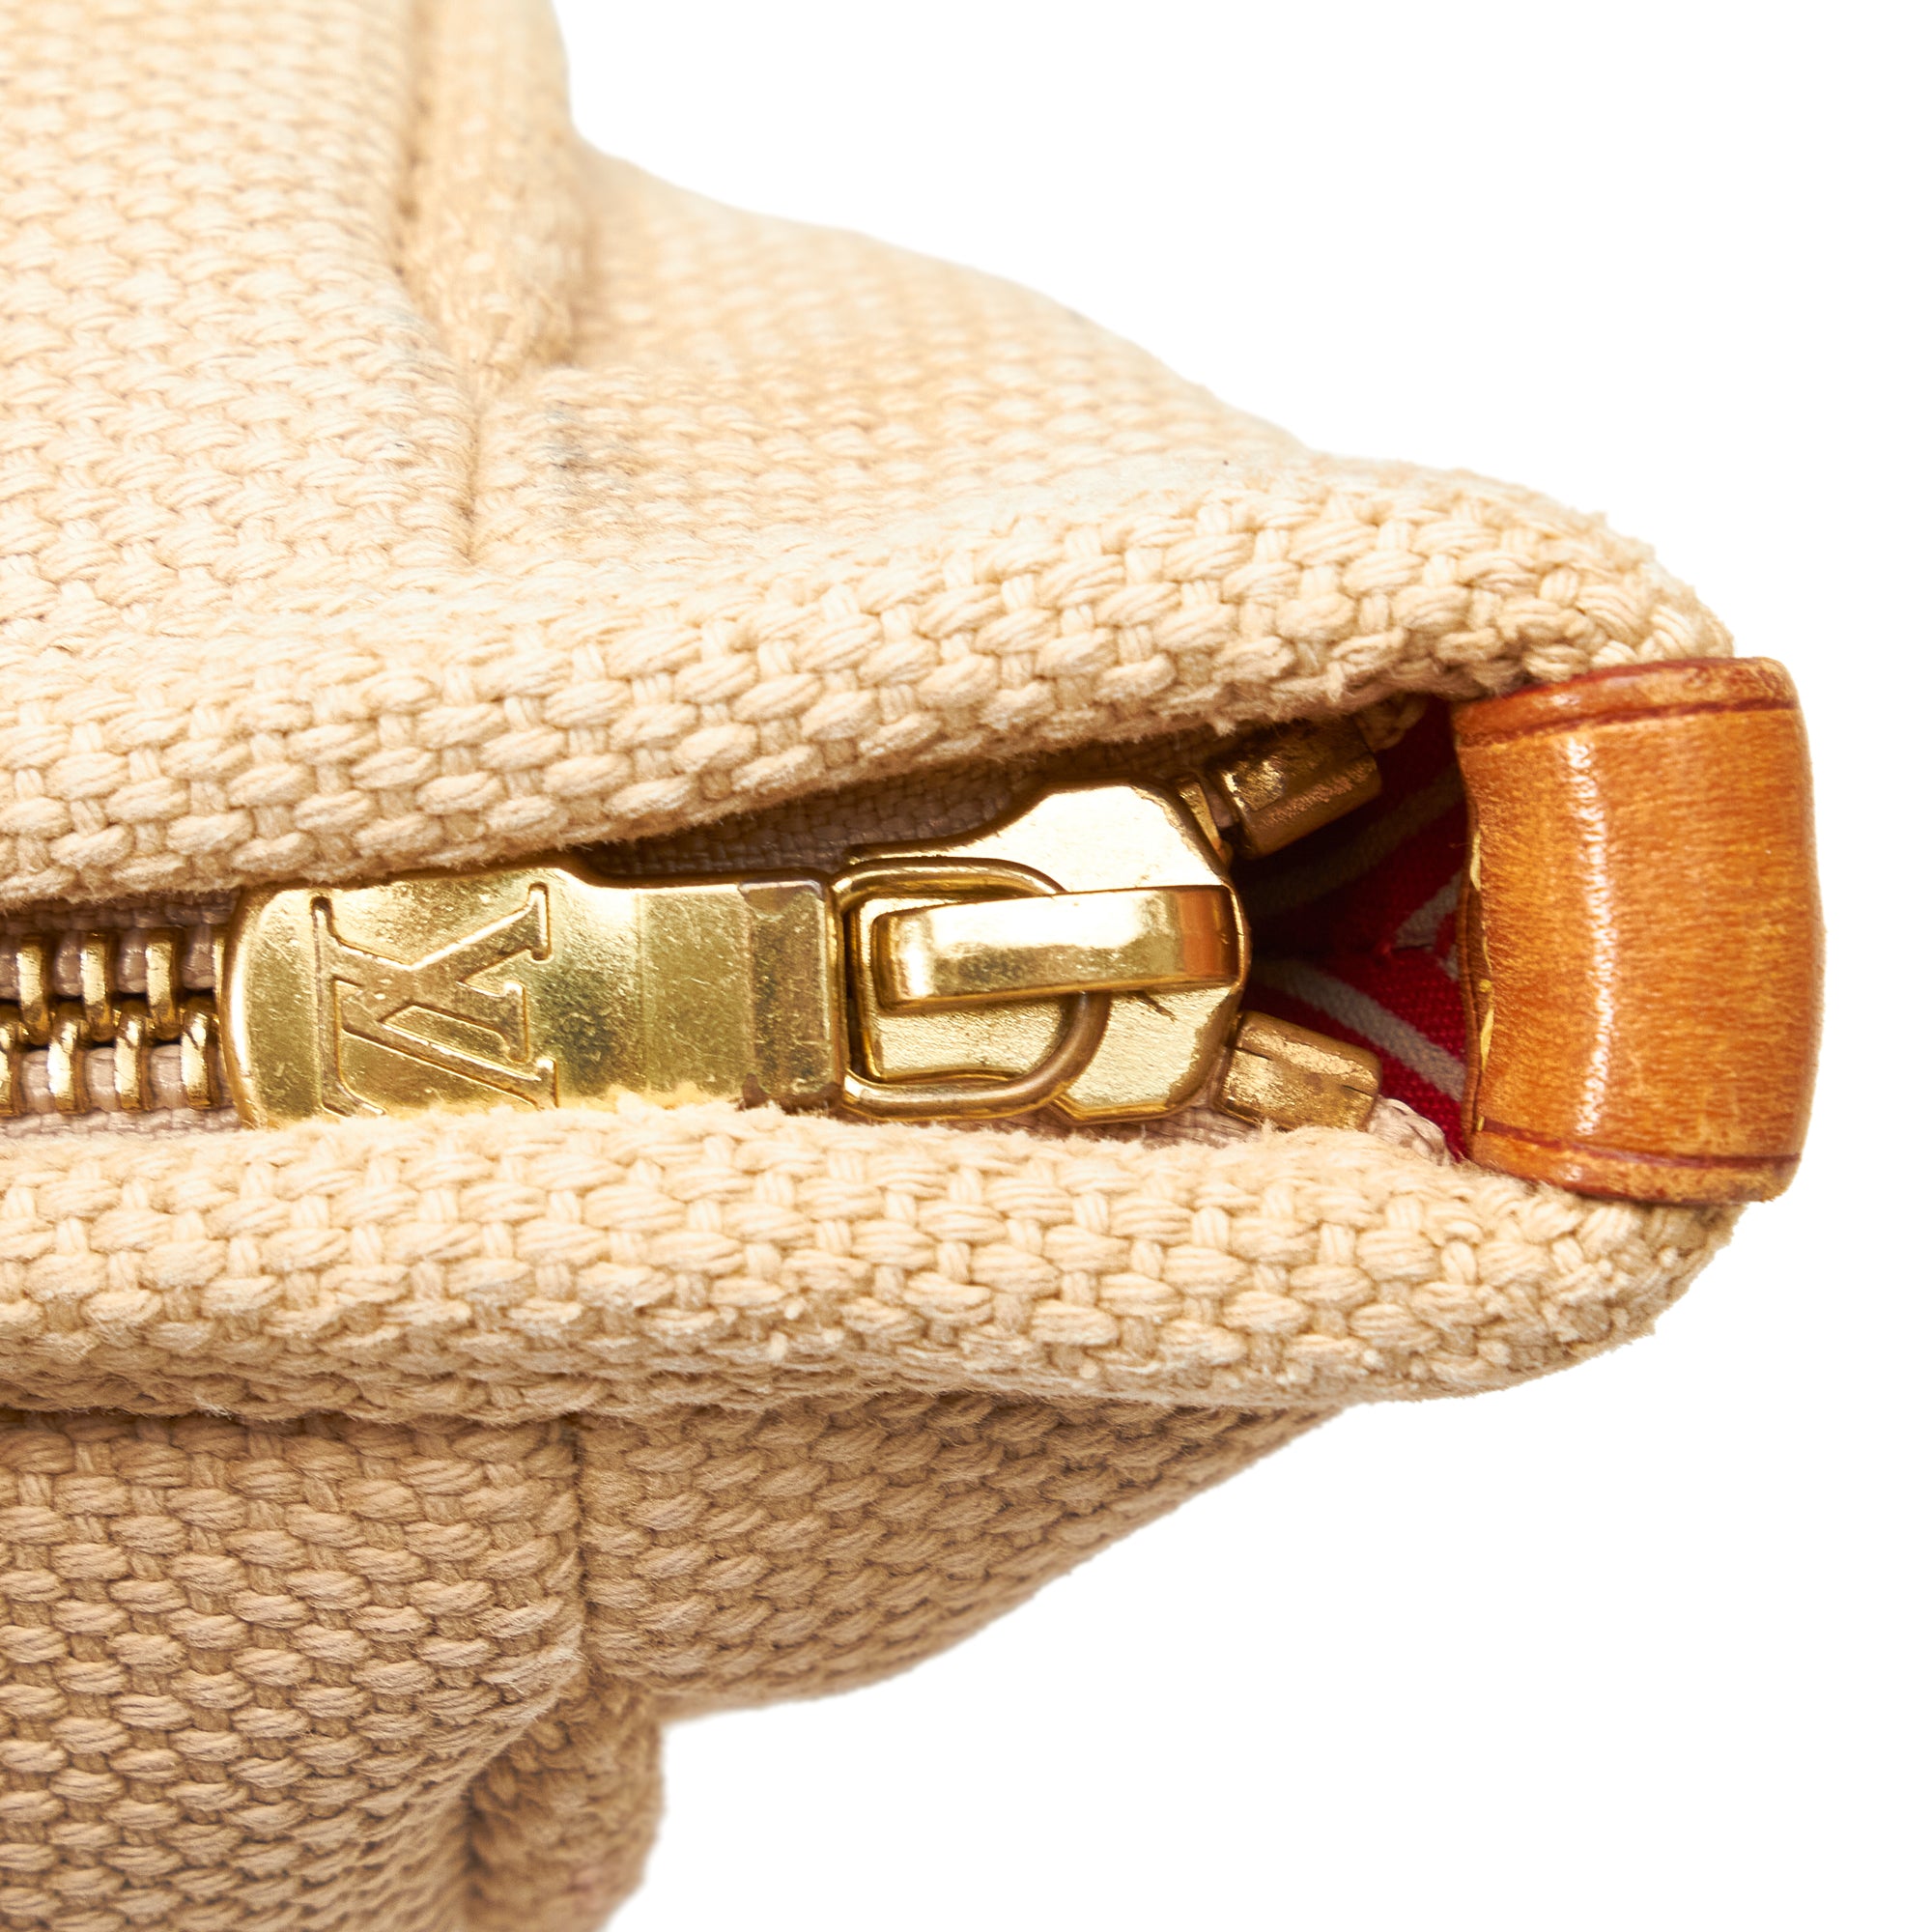 Brown Louis Vuitton Antigua Cabas MM Tote Bag – Designer Revival